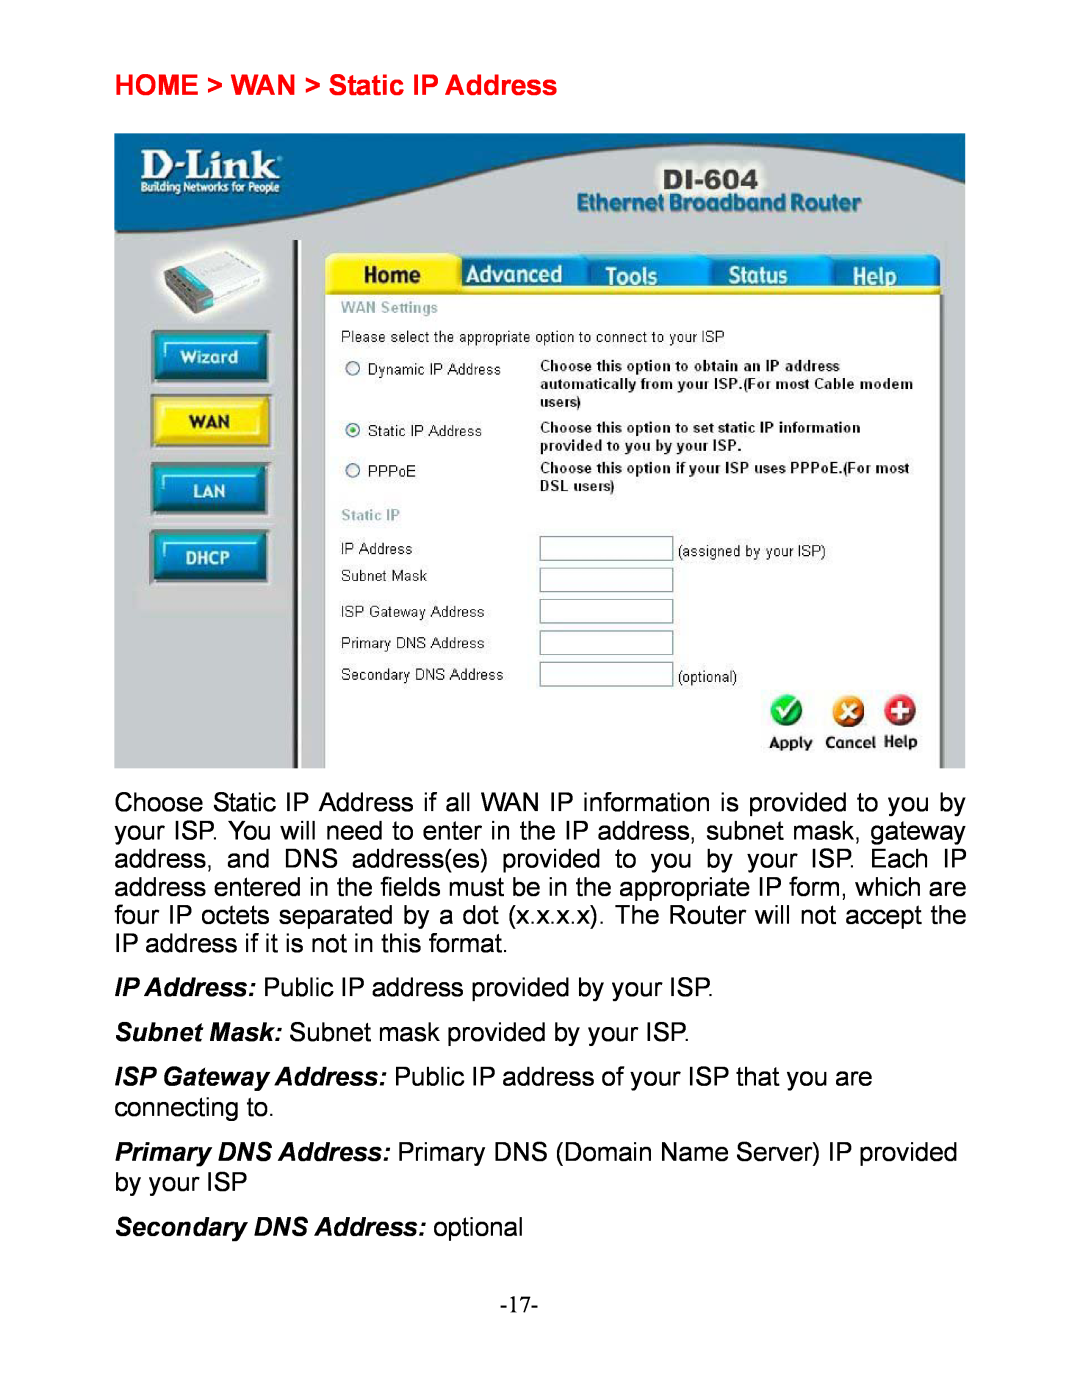 D-Link DI-604 manual HOME WAN Static IP Address, Secondary DNS Address optional 